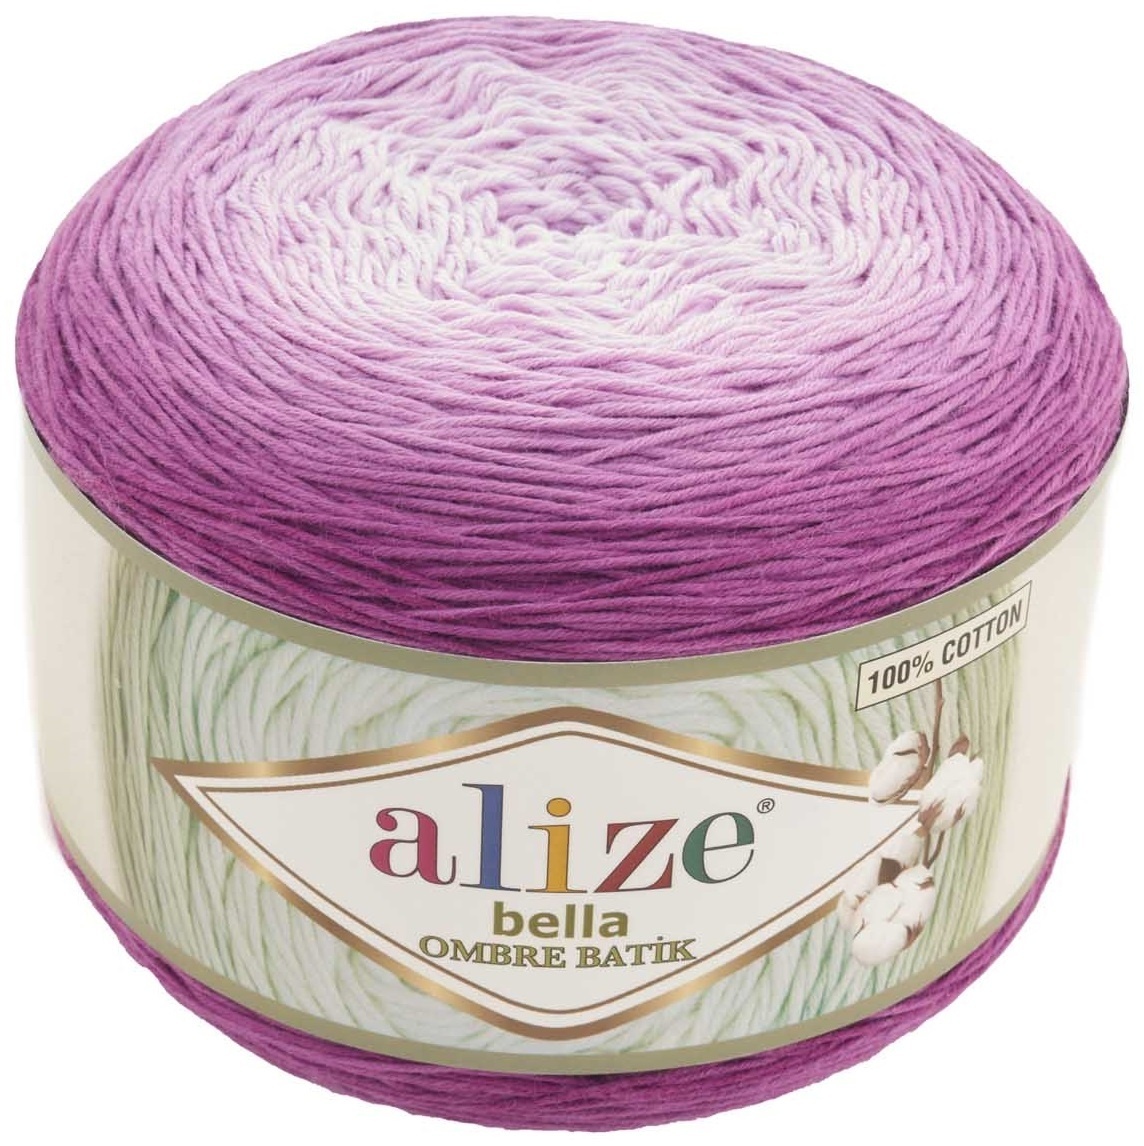 Alize Bella Ombre Batik 100% cotton, 2 Skein Value Pack, 500g фото 13